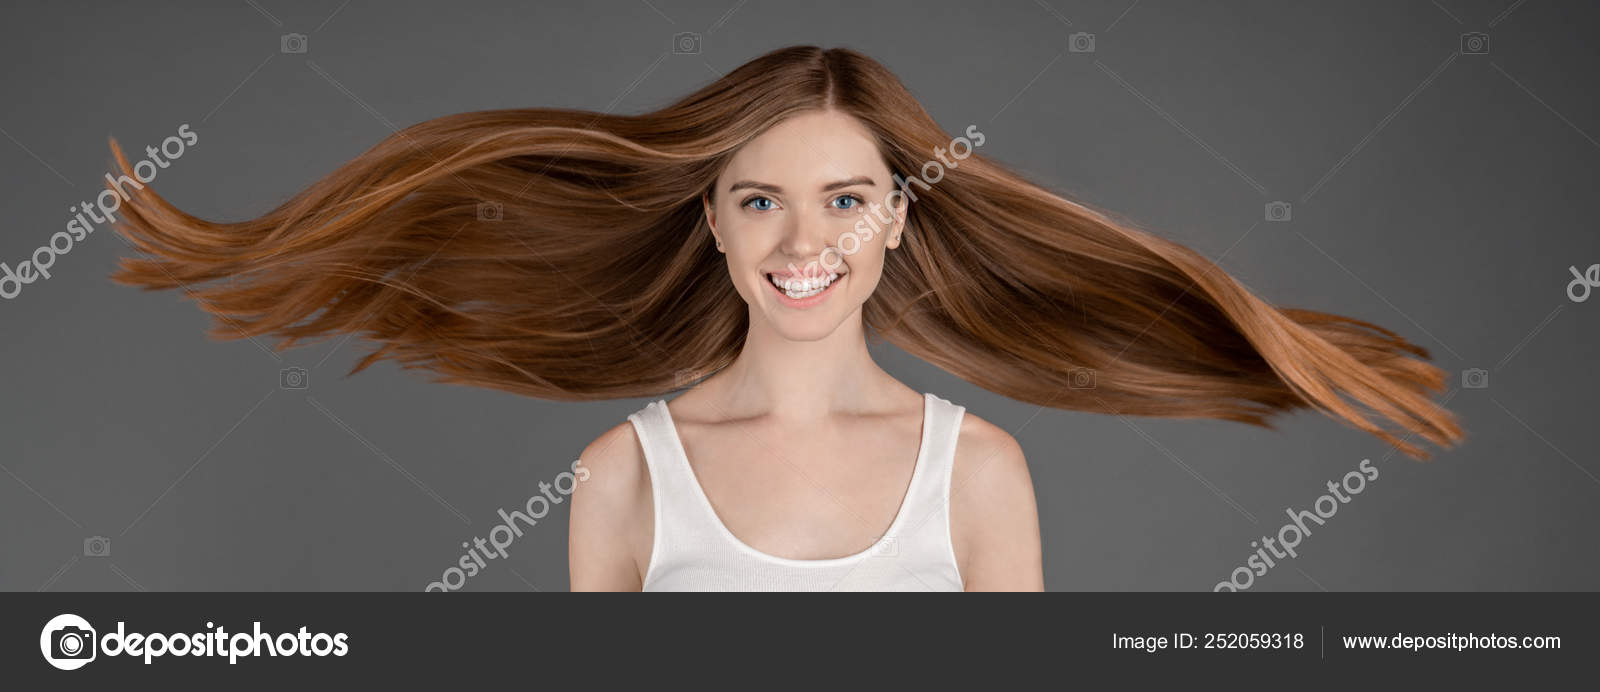 Female Fashion Model Long Brown Hair Grey Background Beautiful Smiling  Stock Photo by ©InsideCreativeHouse 252059318